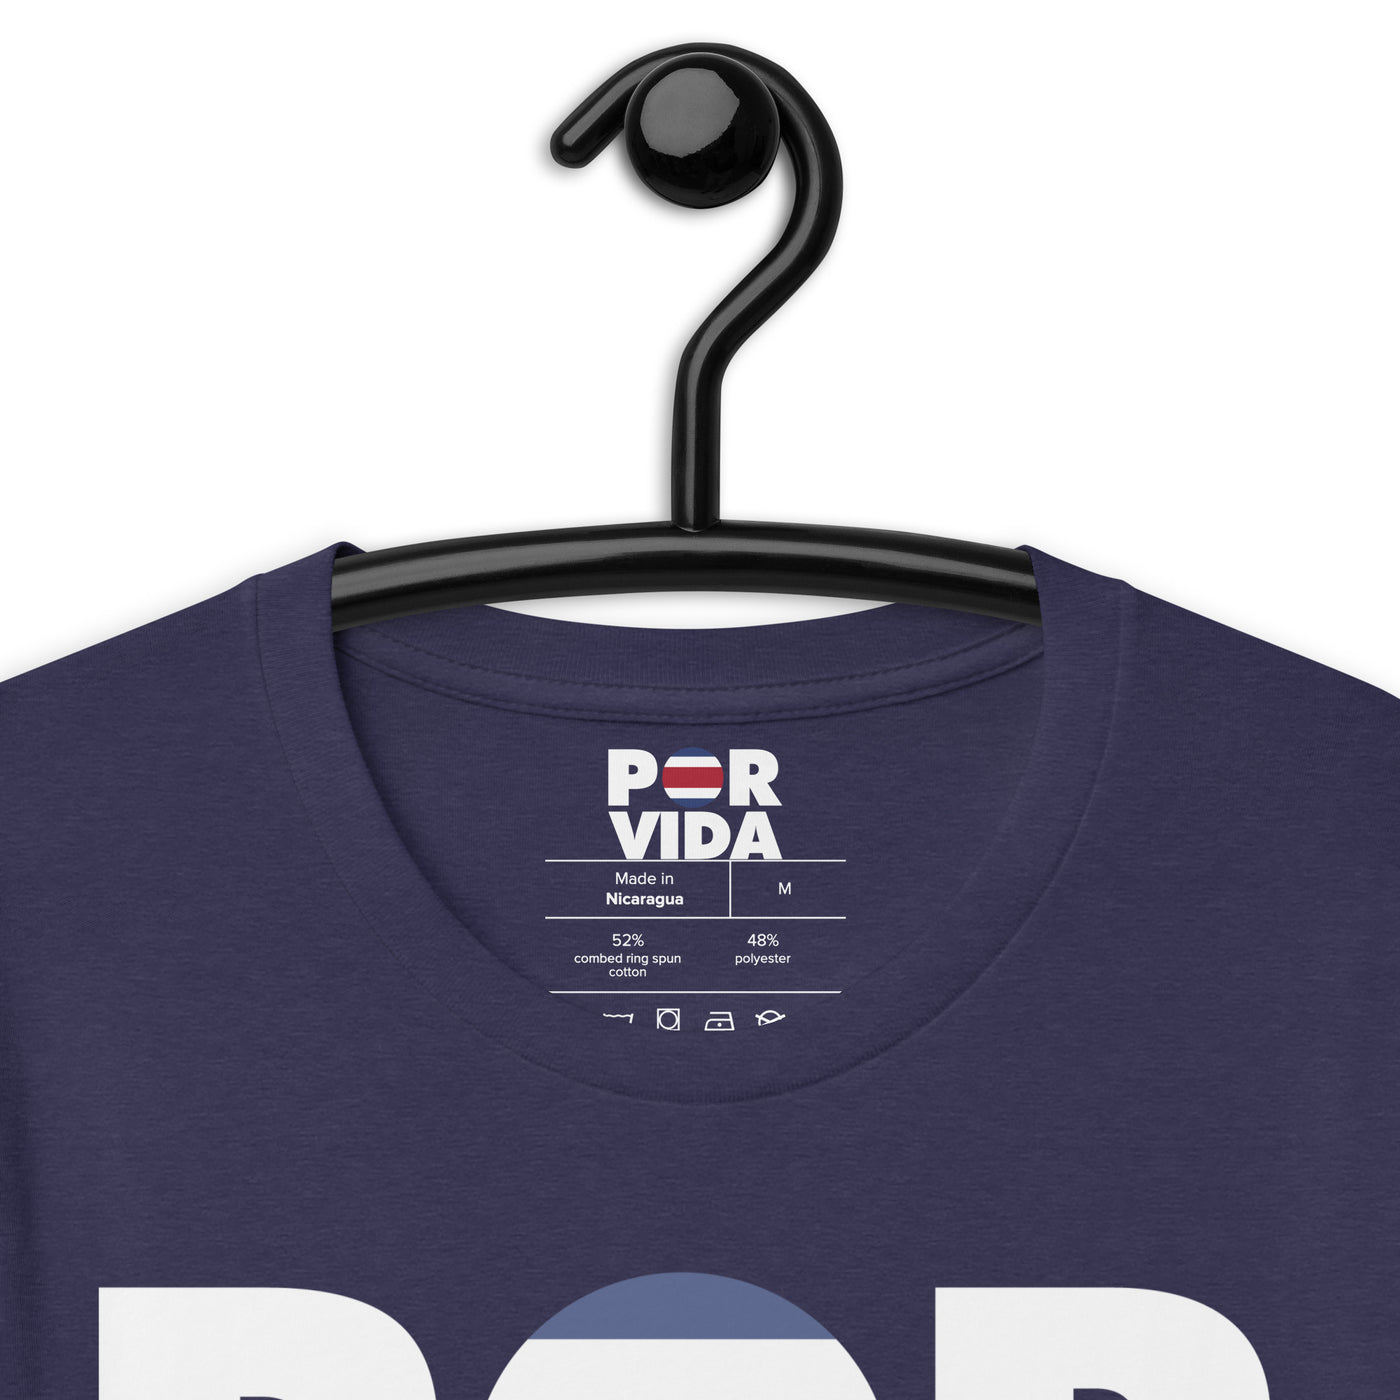 Costa Rica POR VIDA (White Text) Unisex t-shirt